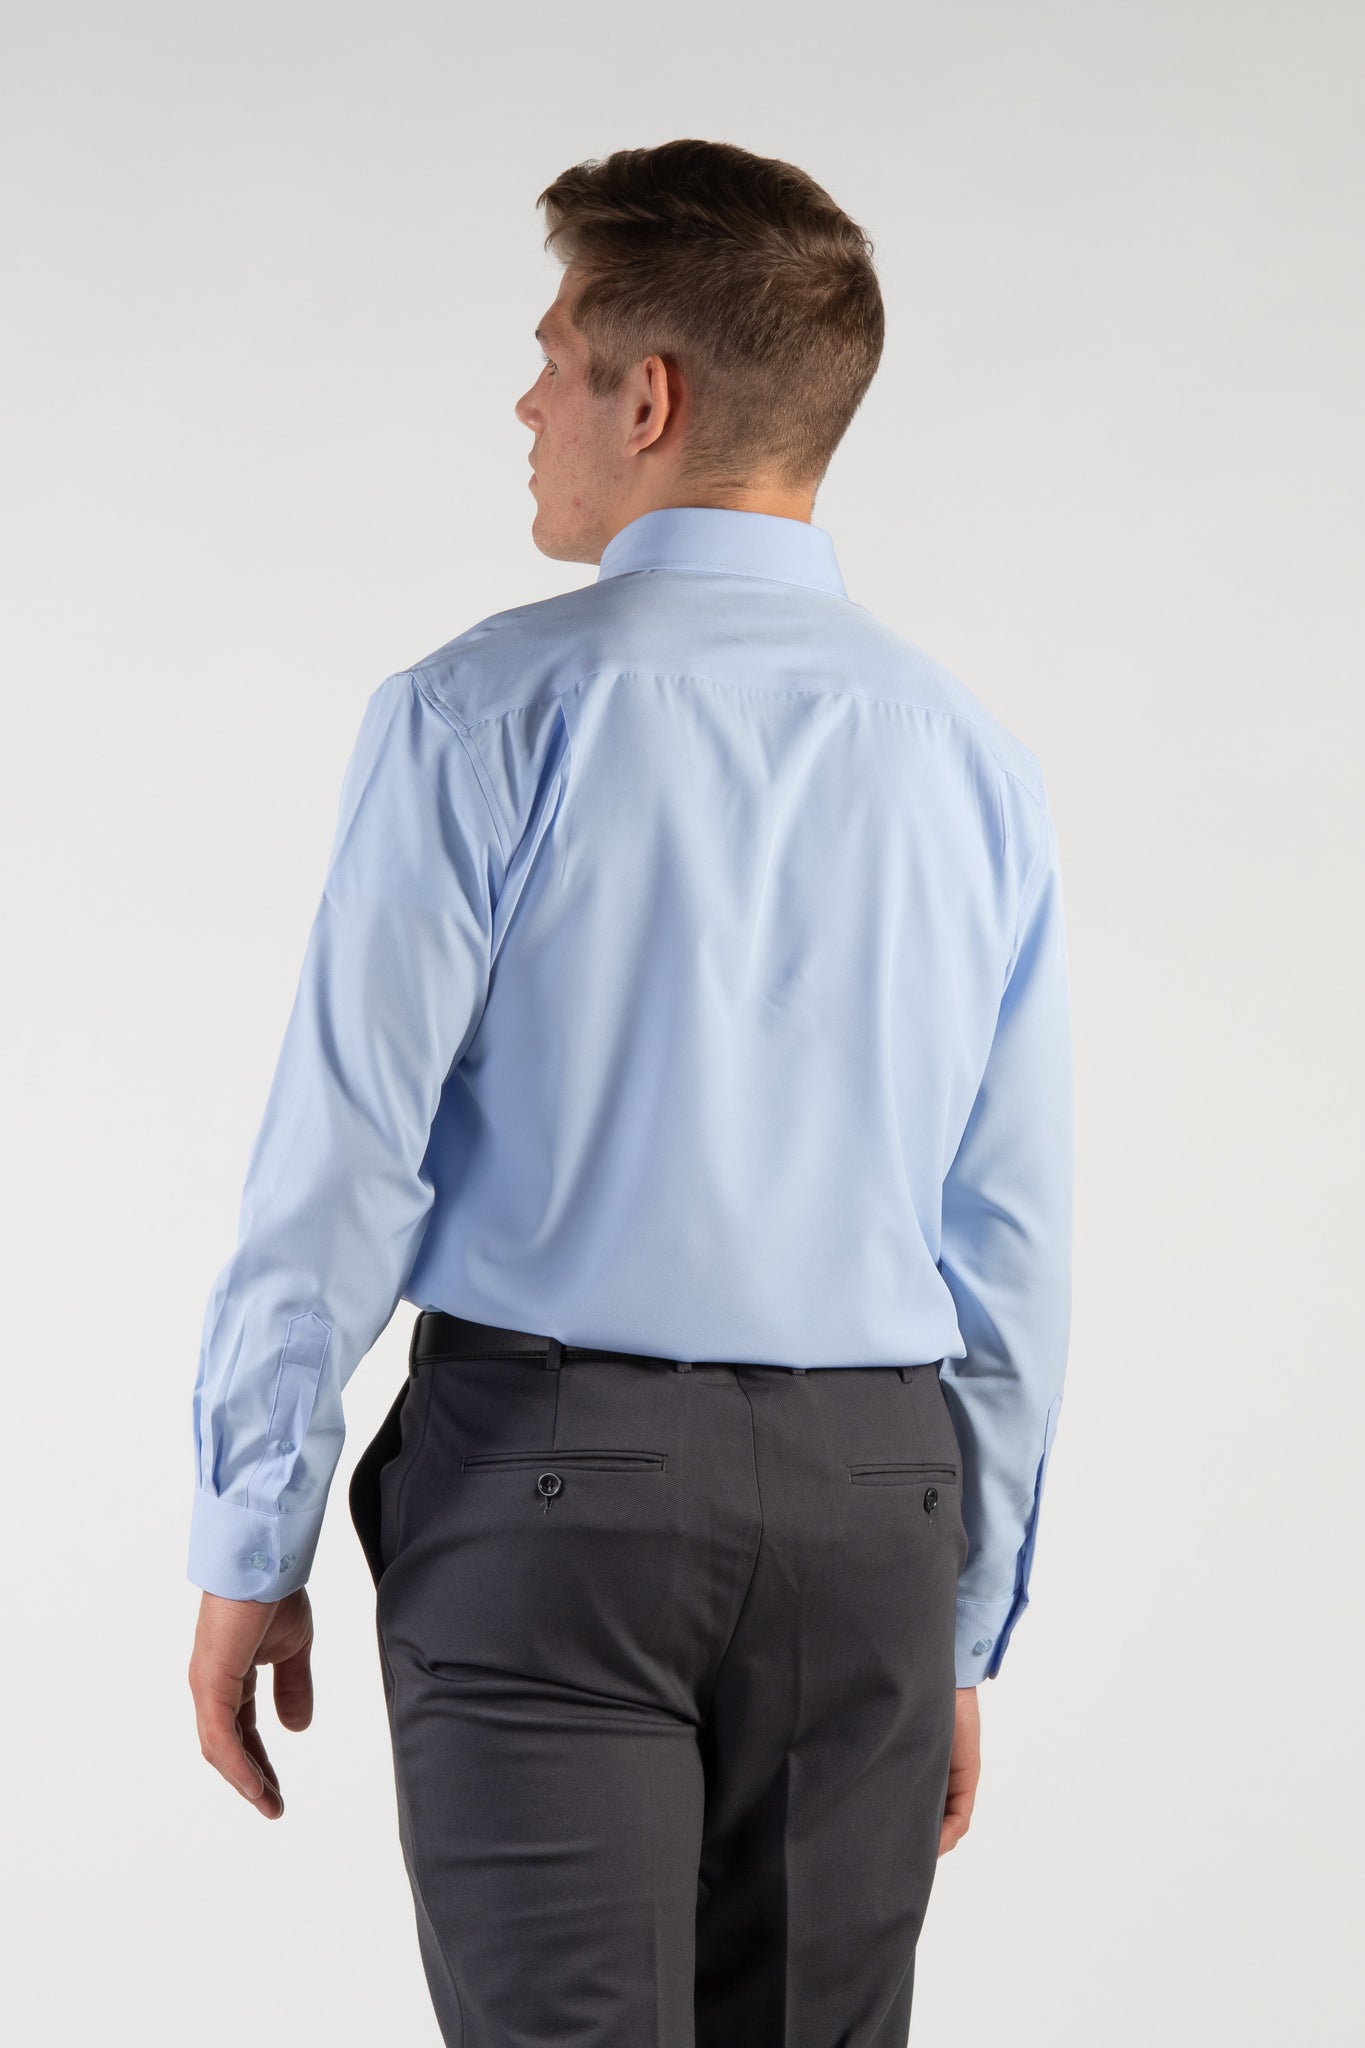 Robbins & Brooks 4-Way Flex Blue Dress Shirt Long Sleeve